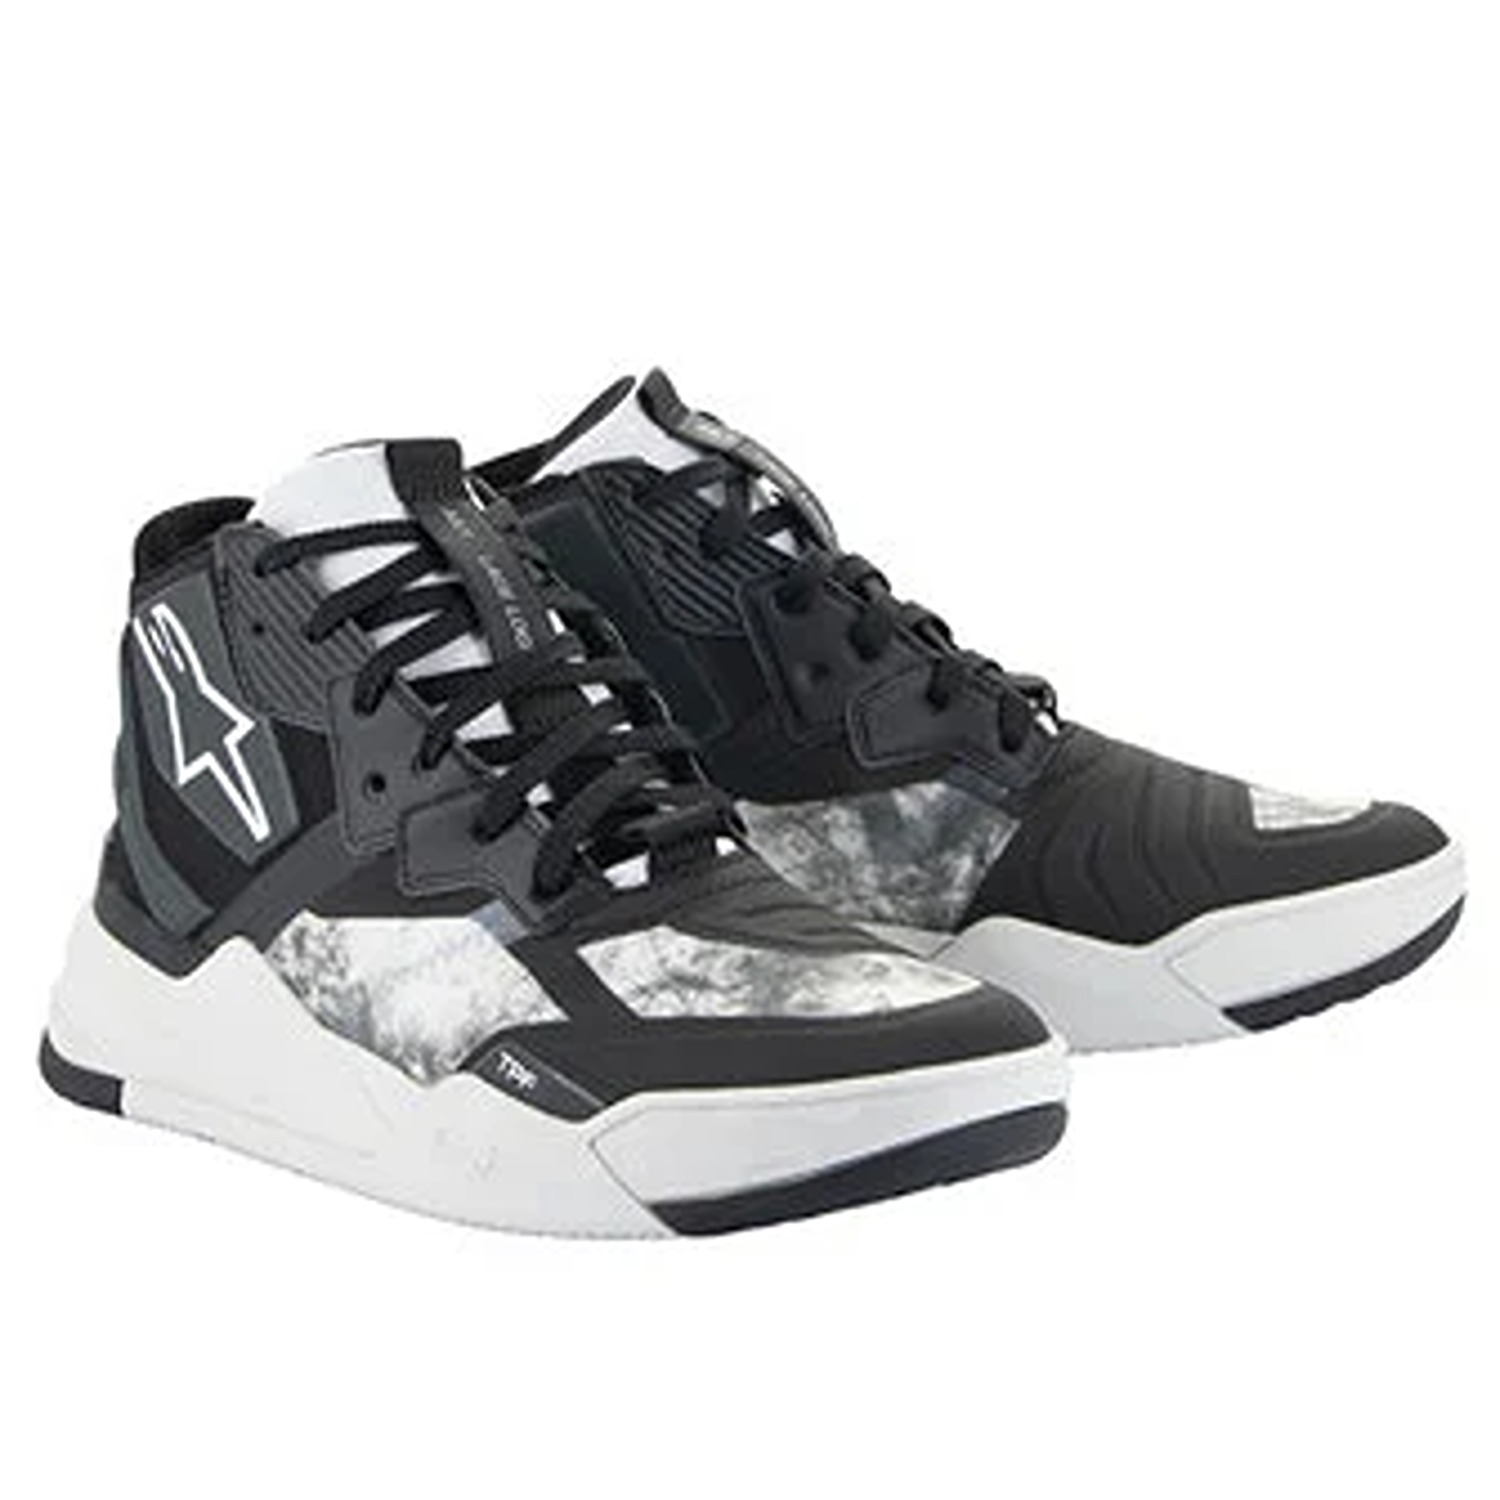 Image of Alpinestars Speedflight Shoes Black Gray White Size US 14 ID 8059347262550